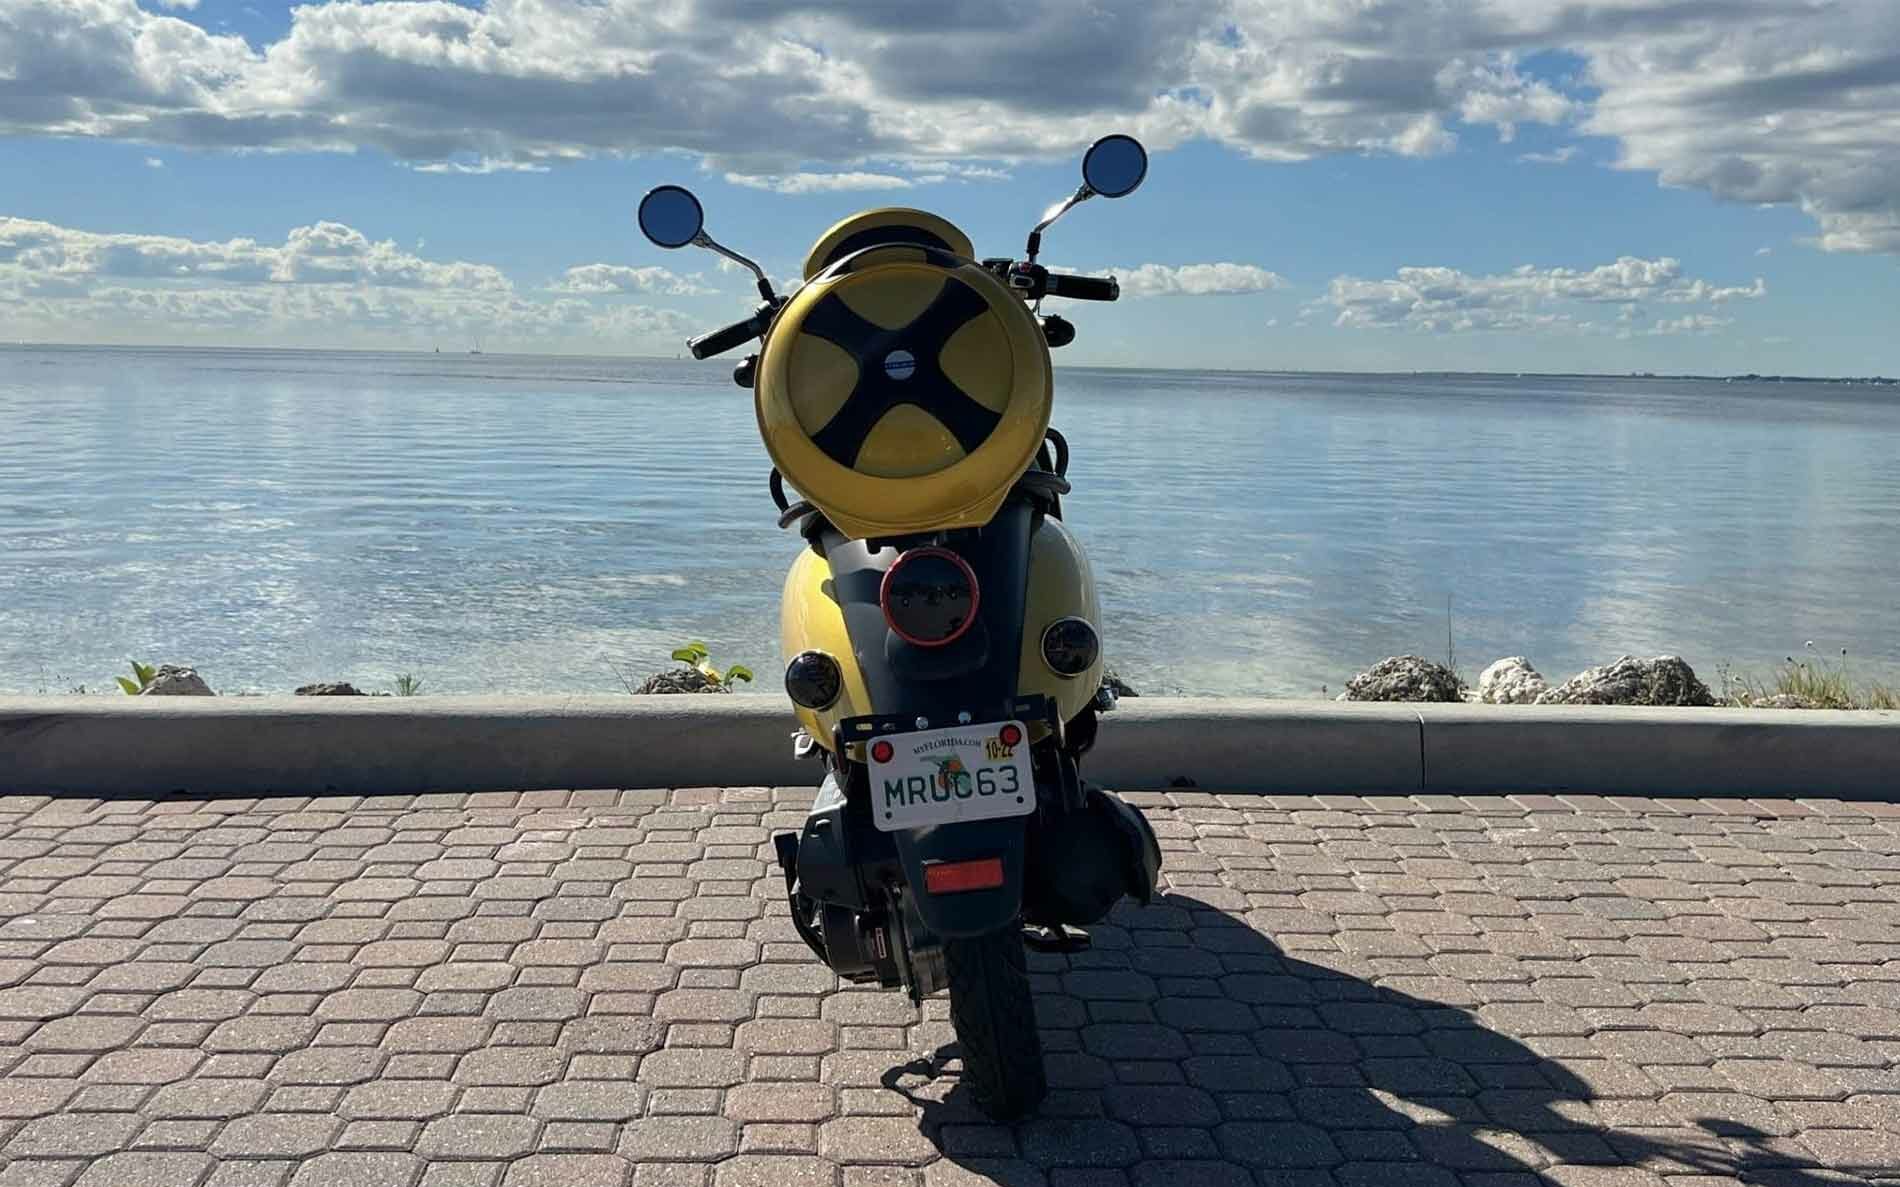 italica-mini-50cc-yellow-scooter-rental-back